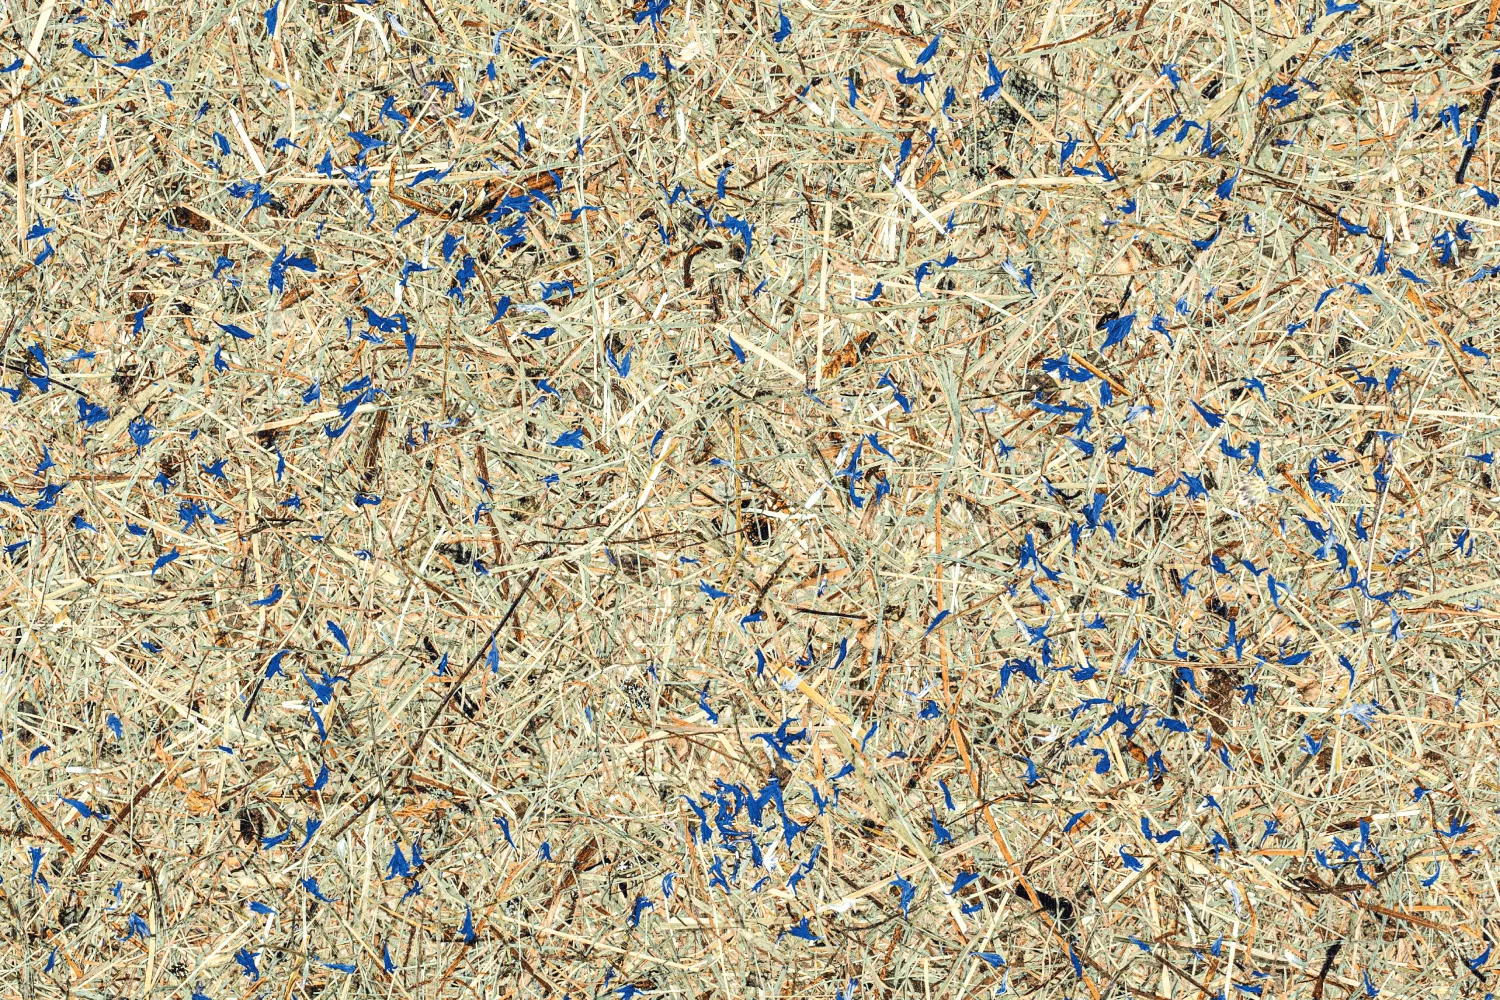 Alpine hay bio and blue cornflowers